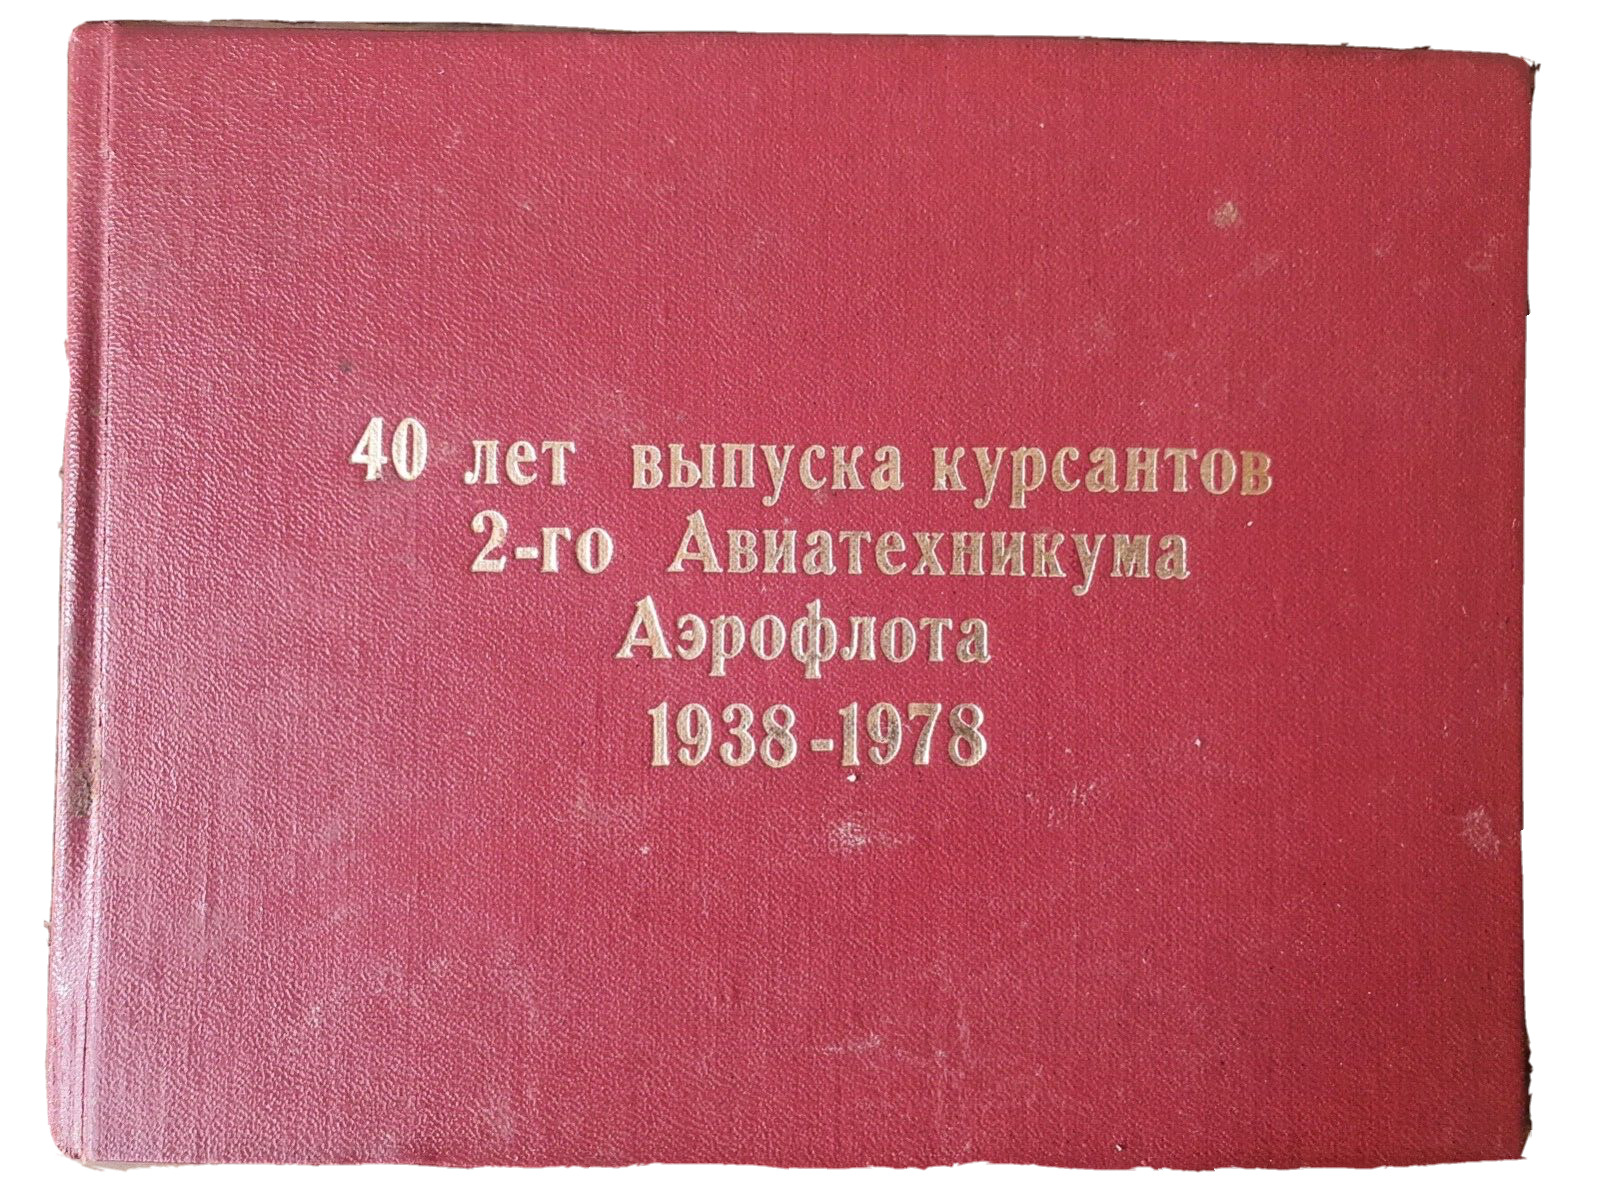 USSR military cadets of Aeroflot Aviation College 1938 1978 Kyiv 33 photos WW2